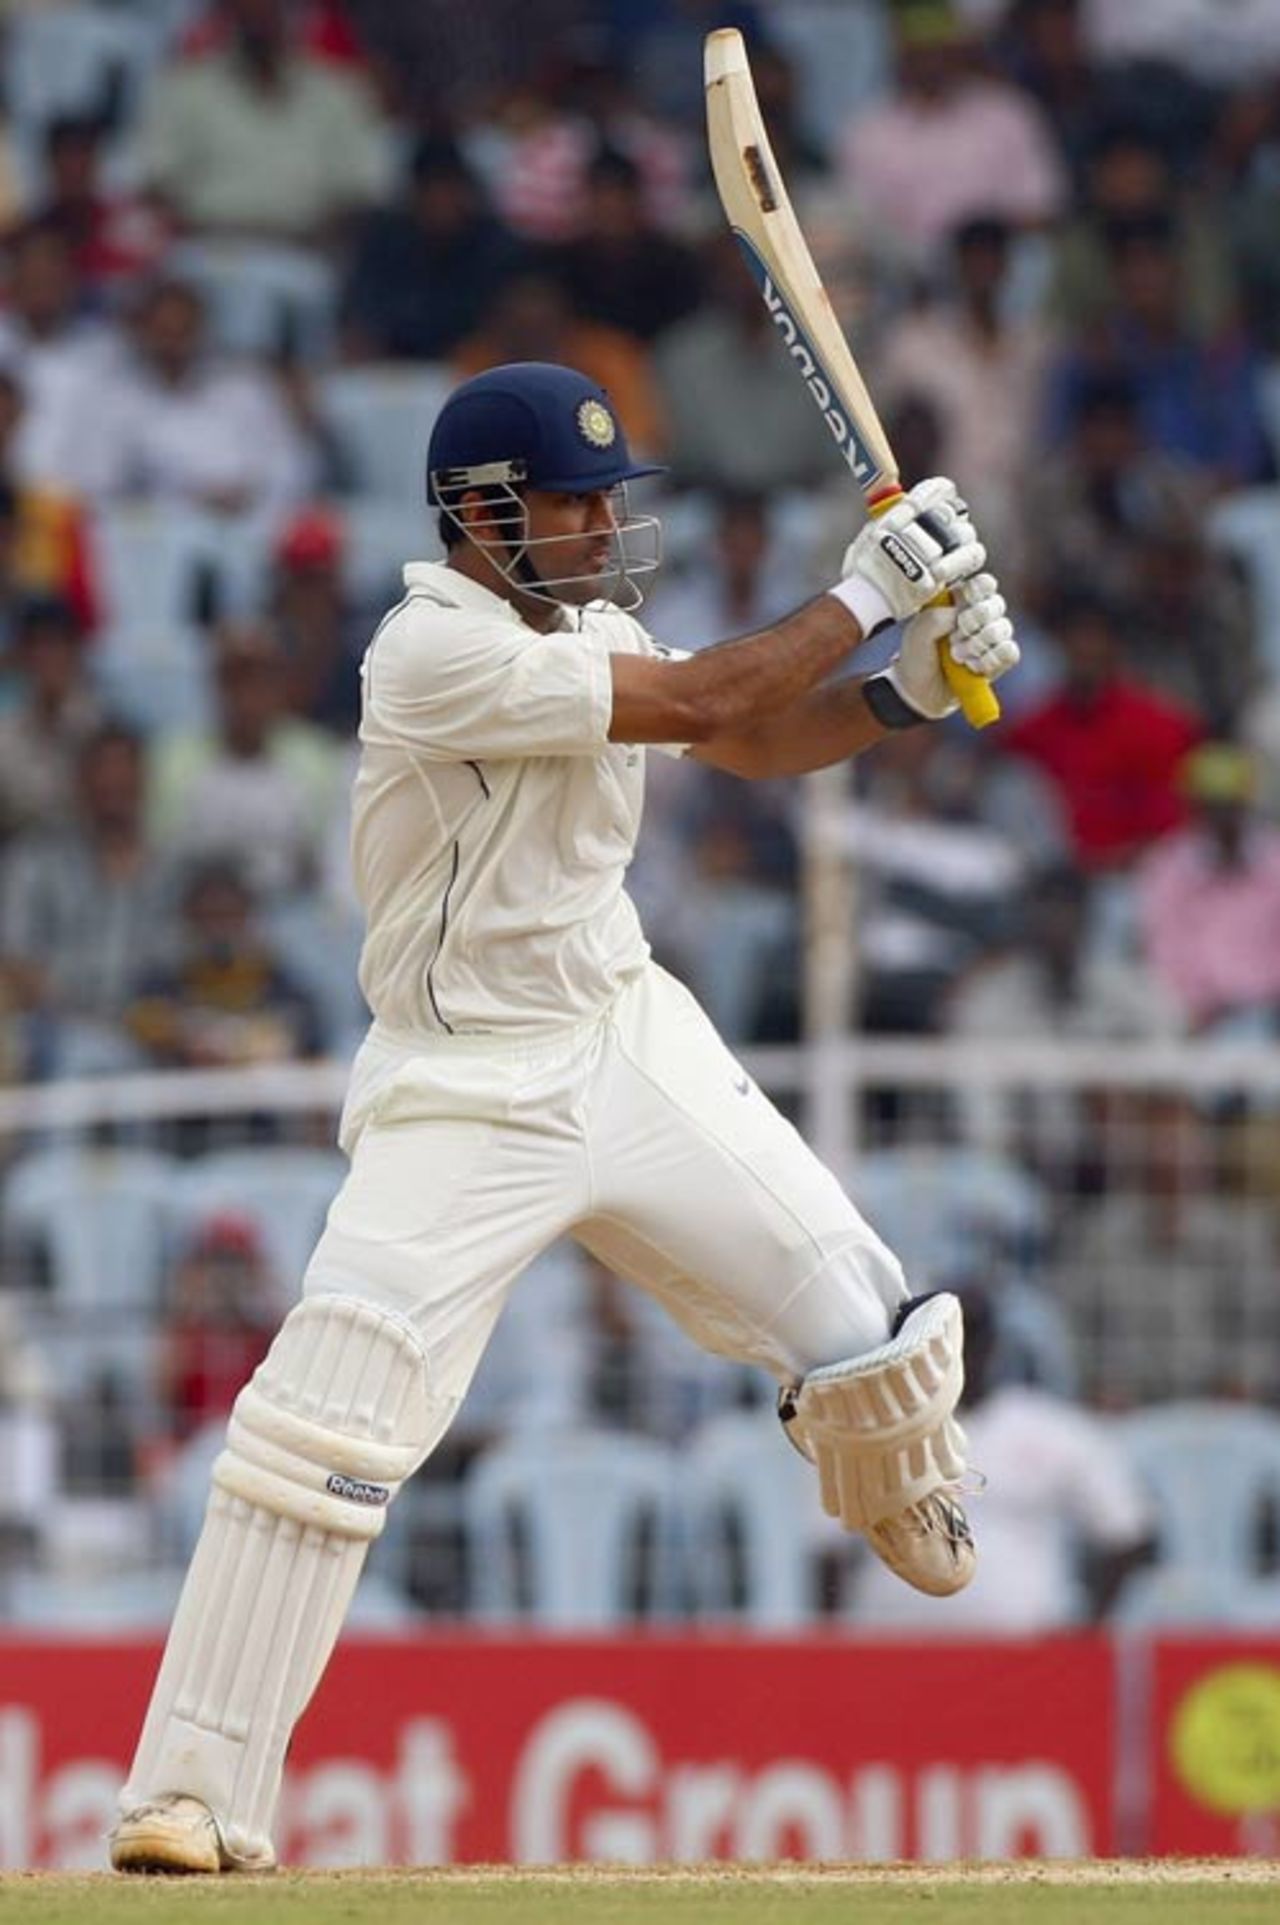 An inimitable Mahendra Singh Dhoni stroke, India v England, 1st Test, Chennai, 3rd day, December 13, 2008